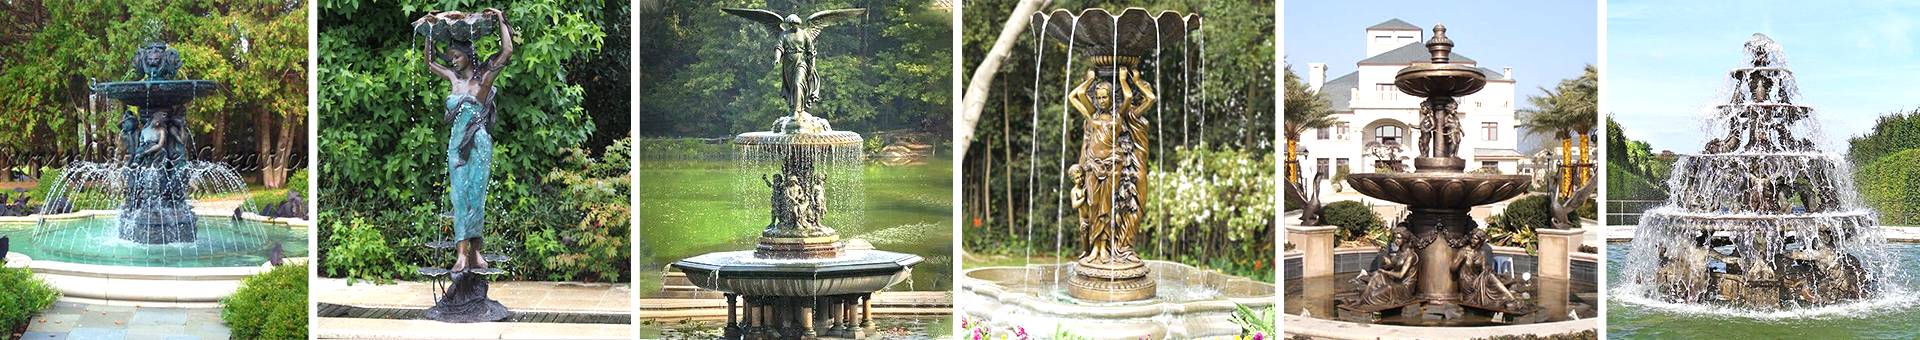 Statuary Fountain